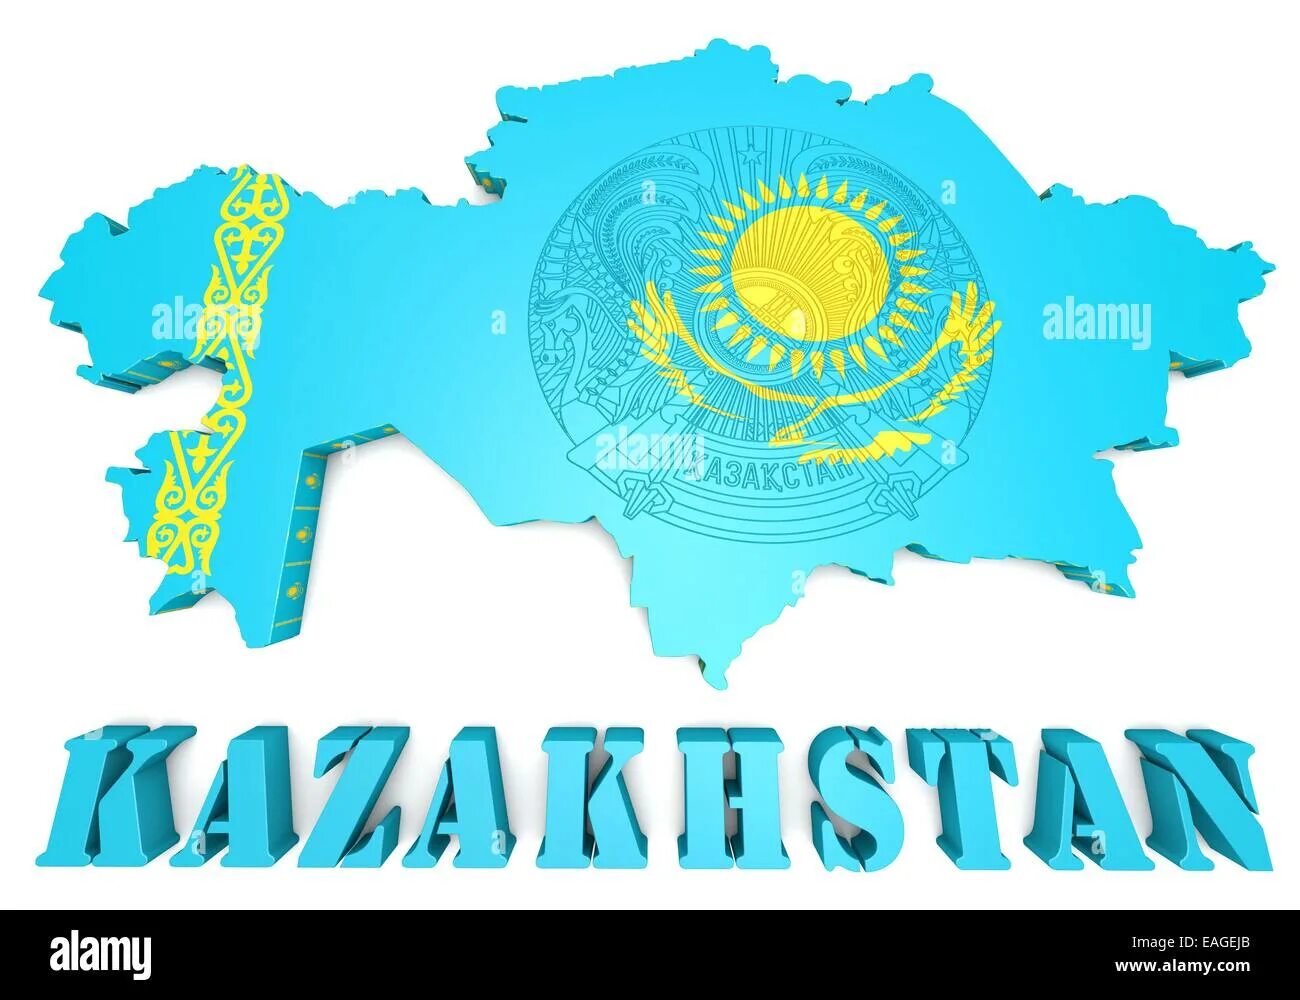 I am kazakh. Казахстан надпись. Казахстан вектор. Казахстан надпись красивая. Флаг Казахстана с надписью Казахстан.